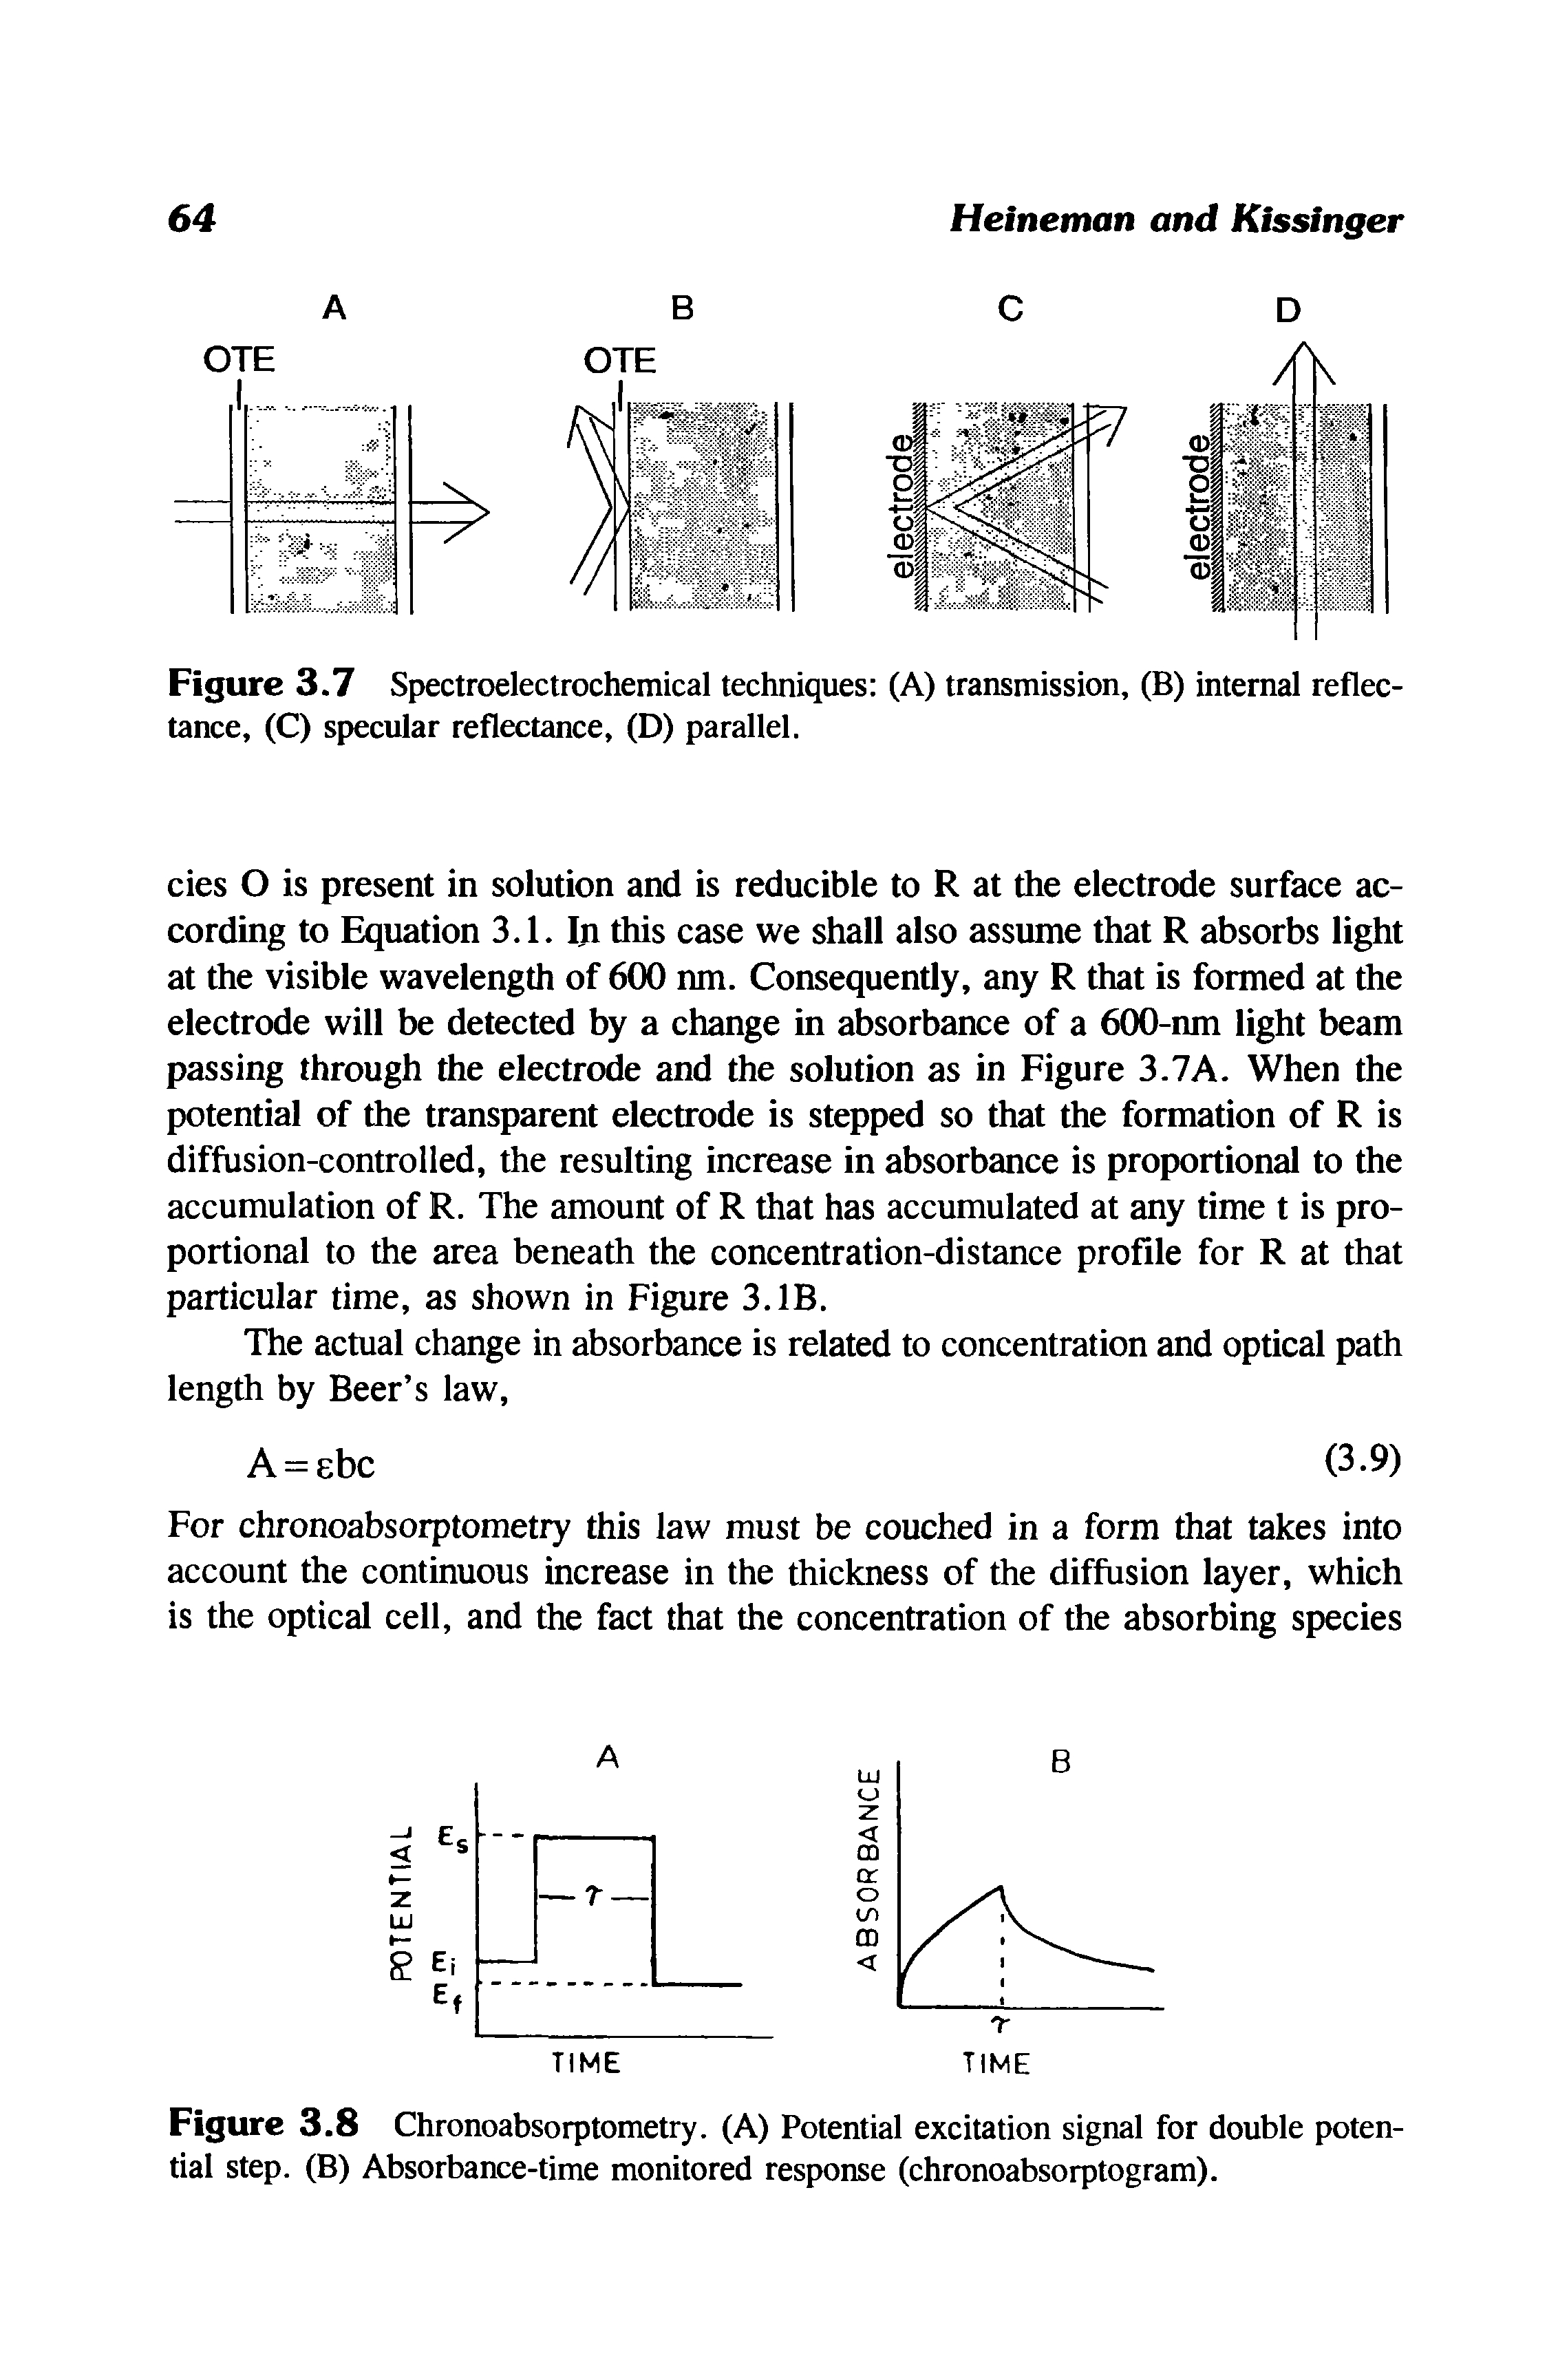 Figure 3.7 Spectroelectrochemical techniques (A) transmission, (B) internal reflectance, (C) specular reflectance, (D) parallel.